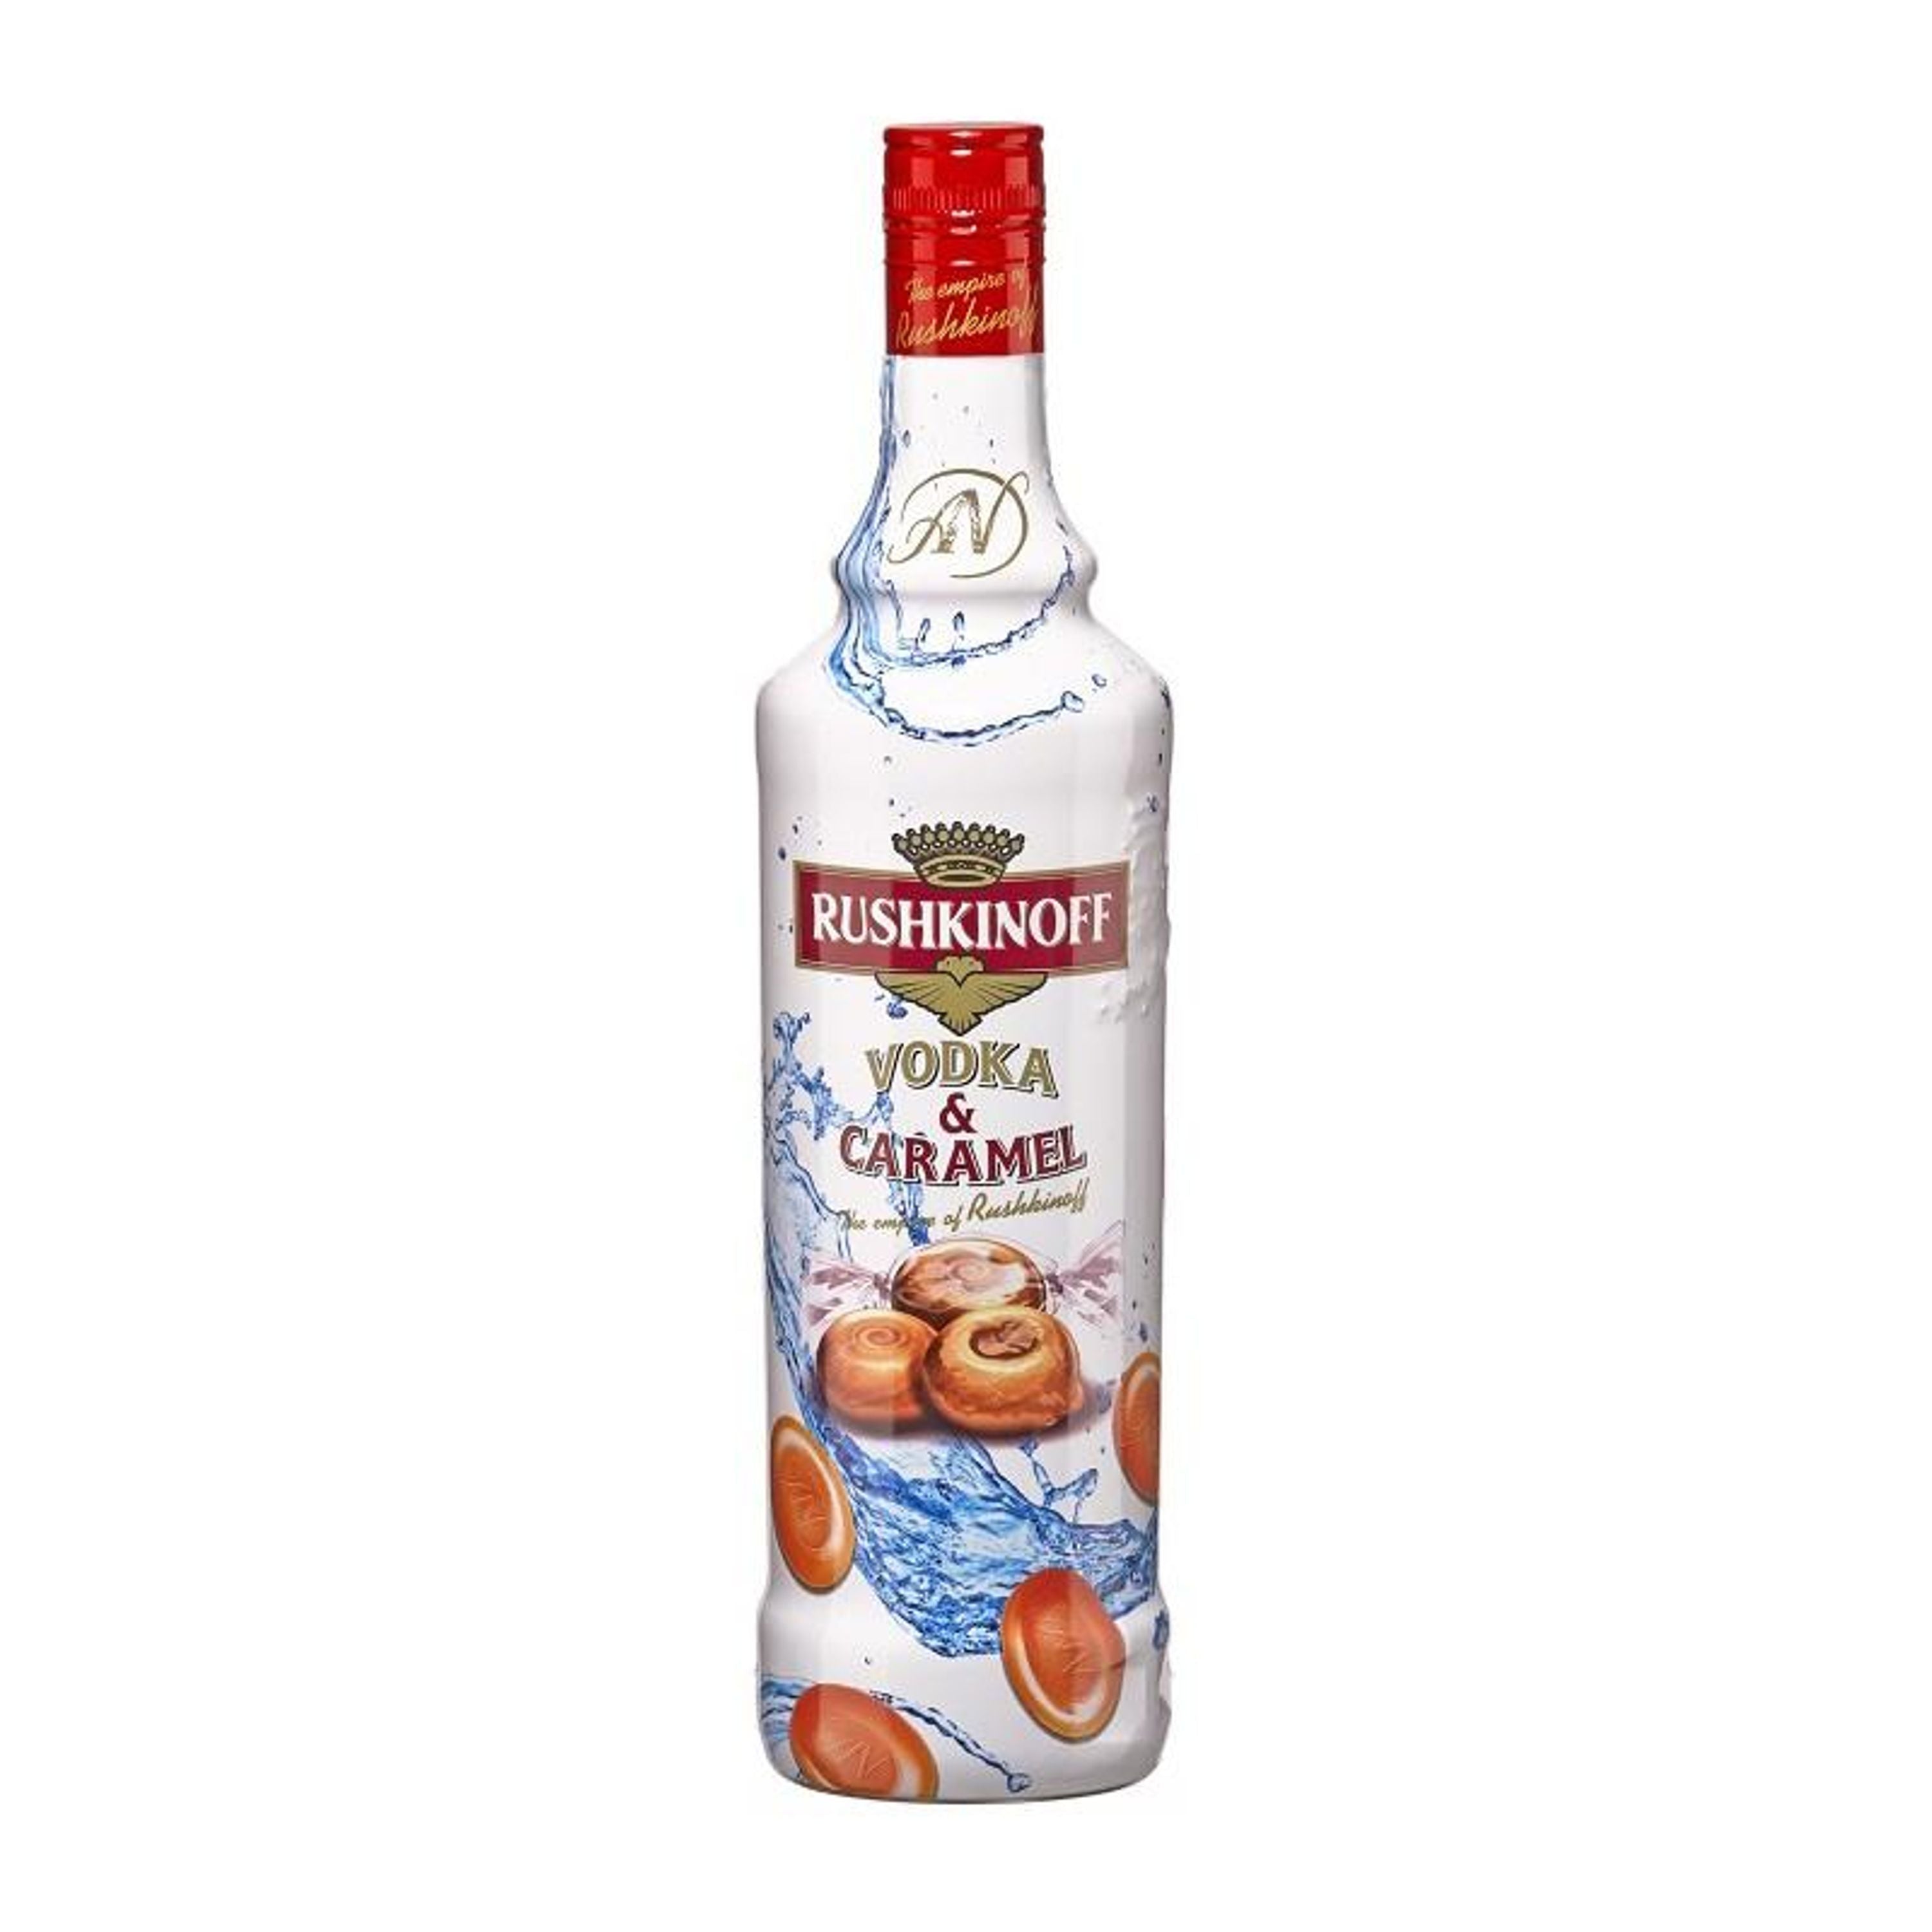 Rushkinoff Vodka &amp; Caramel 1.0 liter alc. 18% by volume, liqueur Mallorca